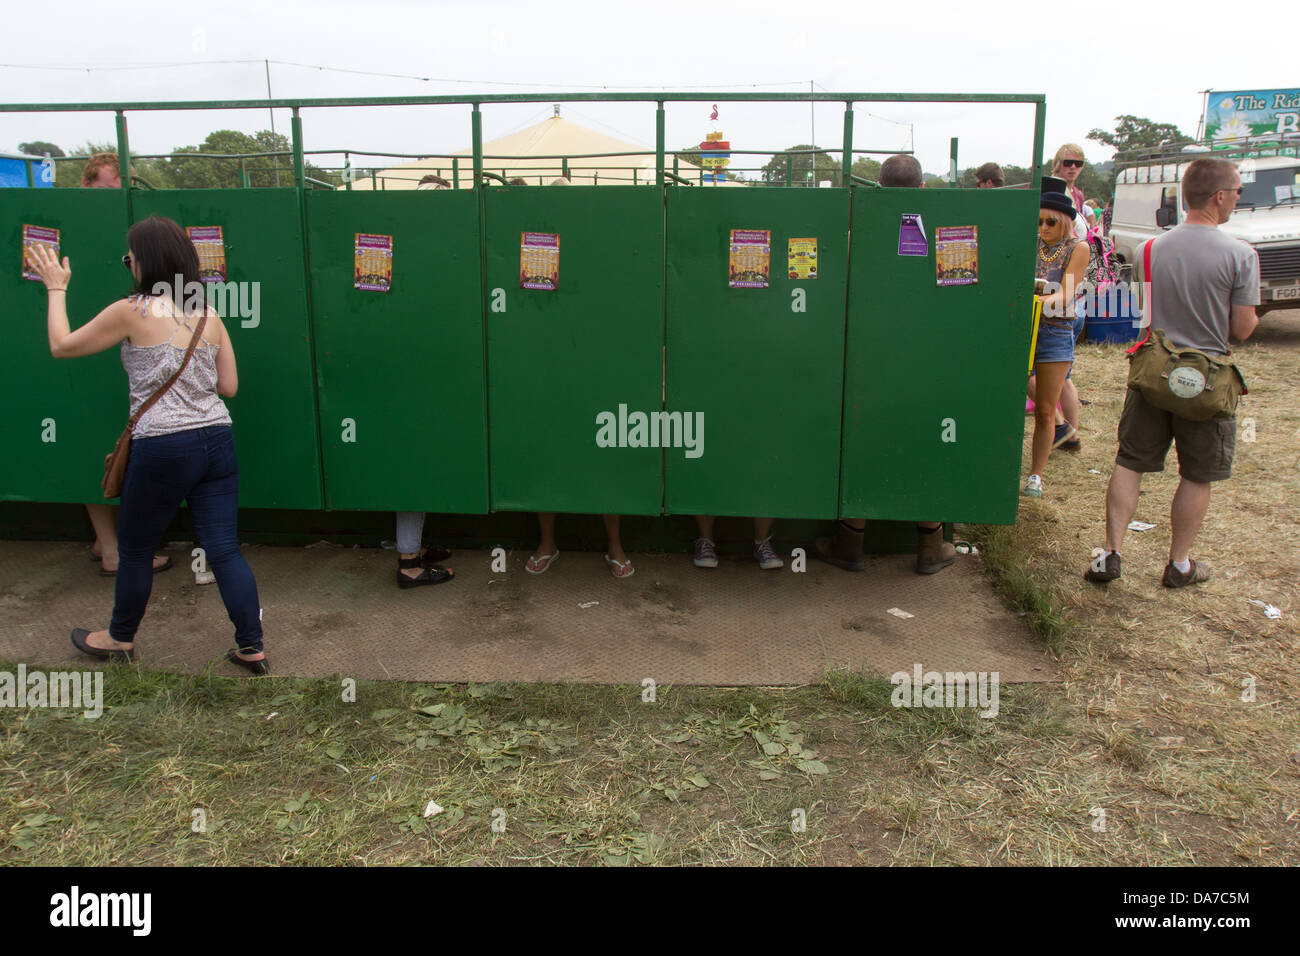 Toilets at the Glastonbury Festival 2013. Stock Photo